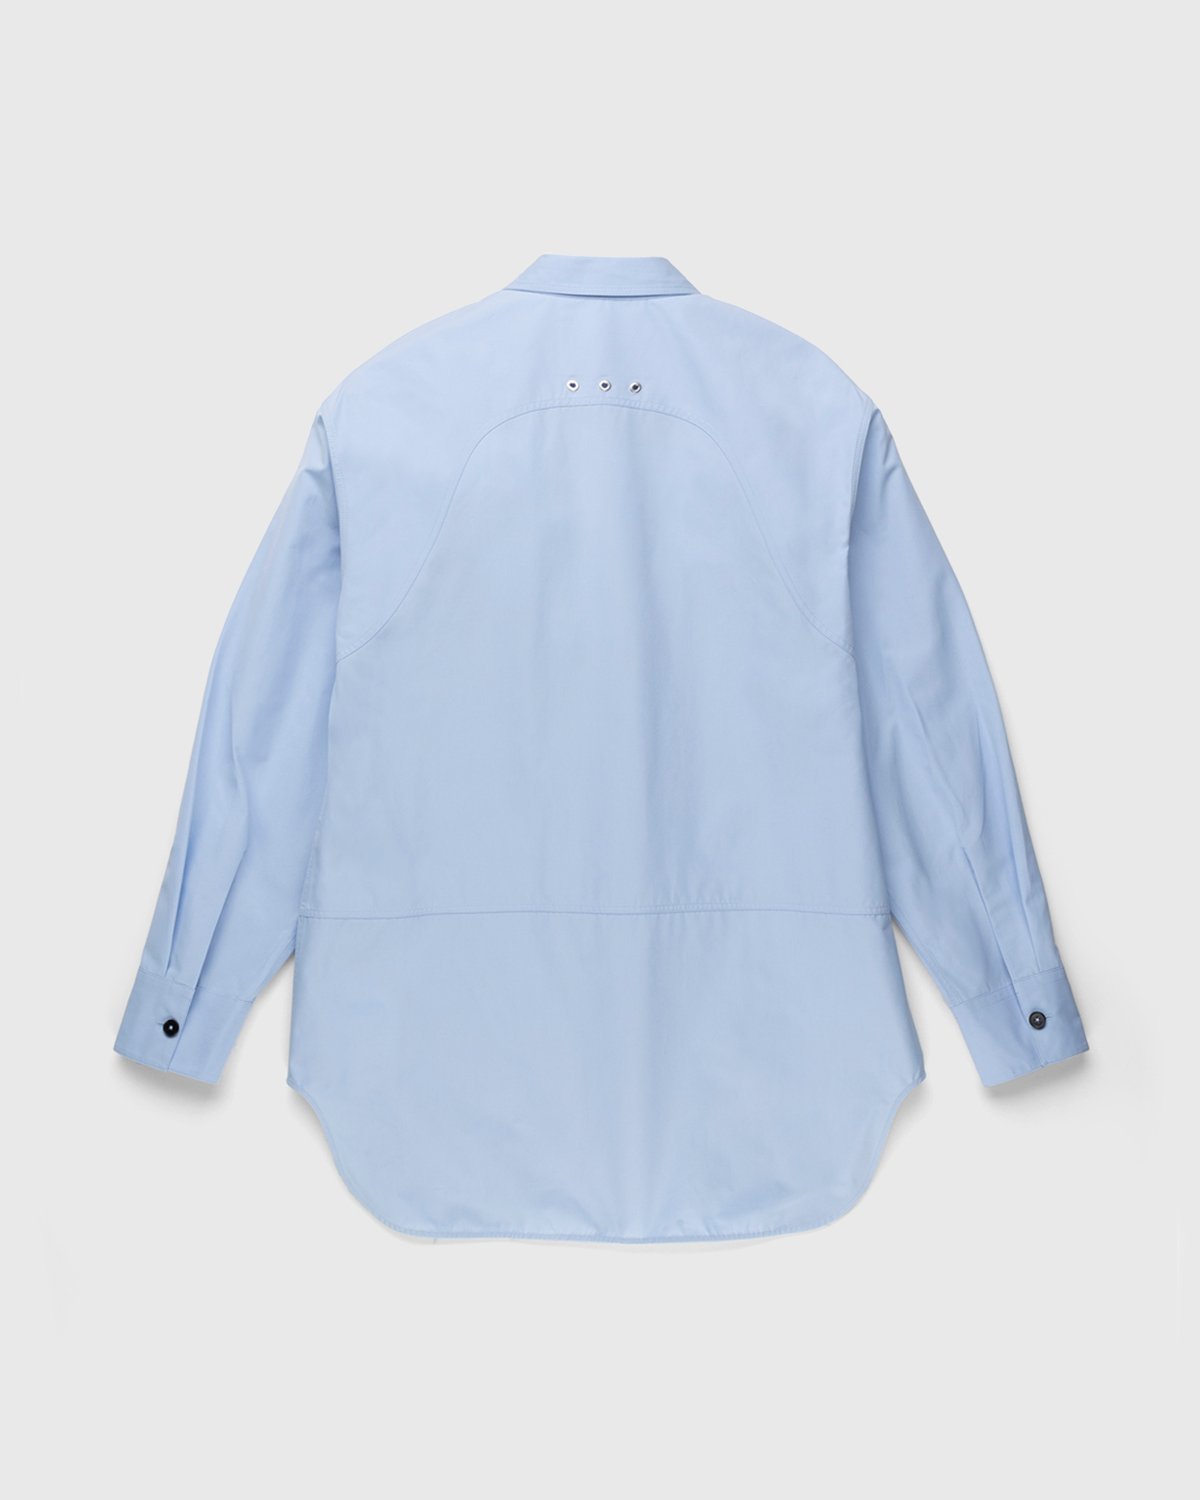 Jil Sander - Oversized Button-Down Shirt Light Pastel Blue - Clothing - Blue - Image 2